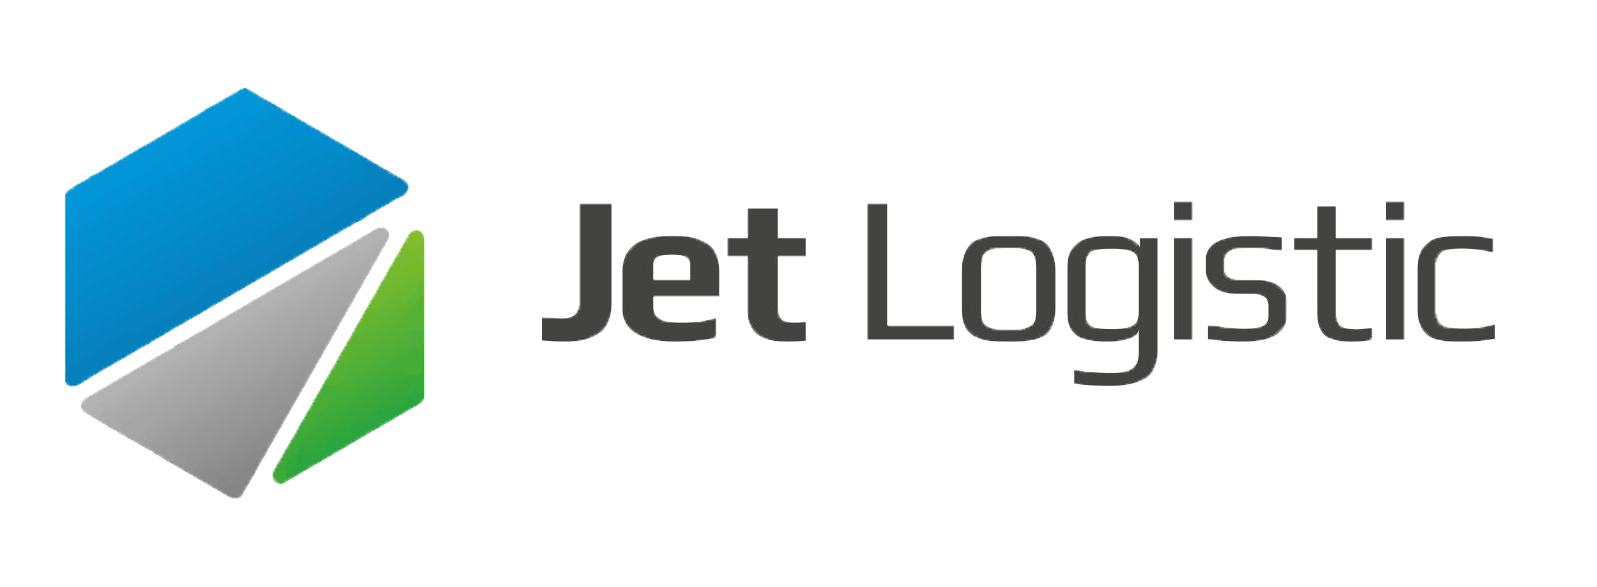 jet-logistic